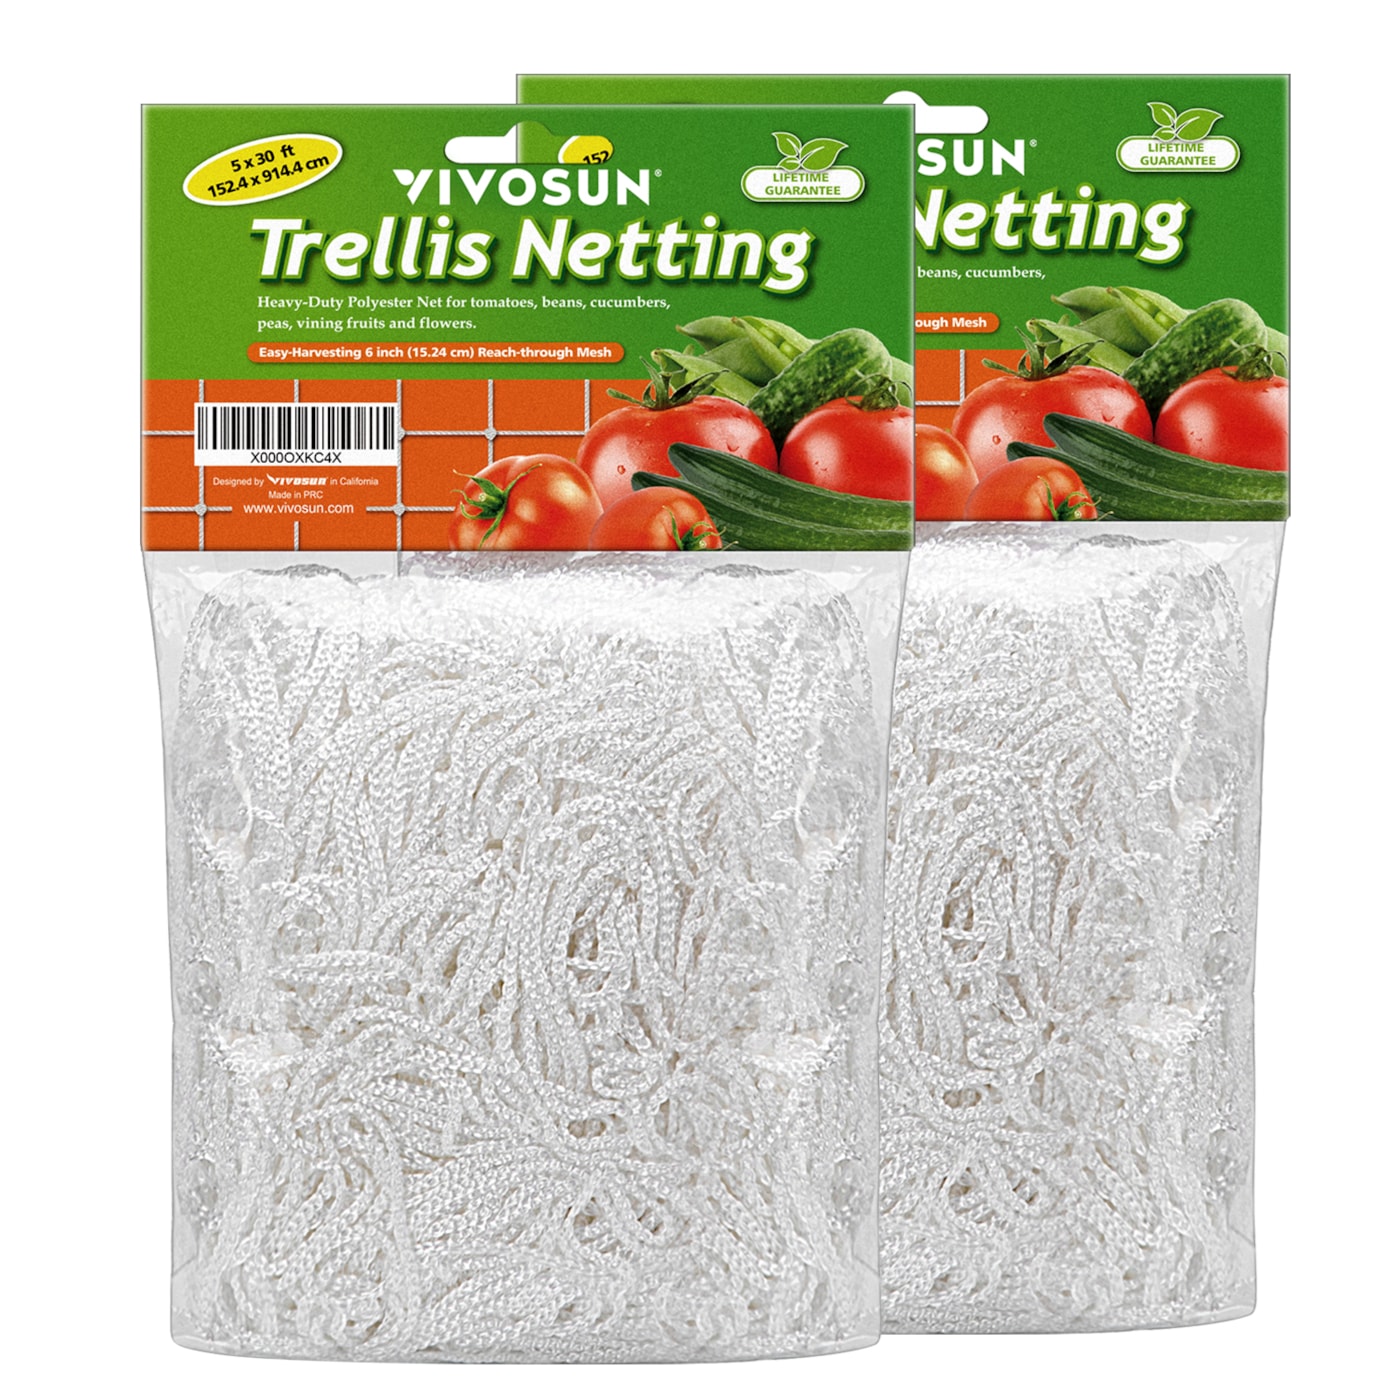 VIVOSUN 5 x 30 ft Heavy-duty Polyester Plant Trellis Netting 2-Pack